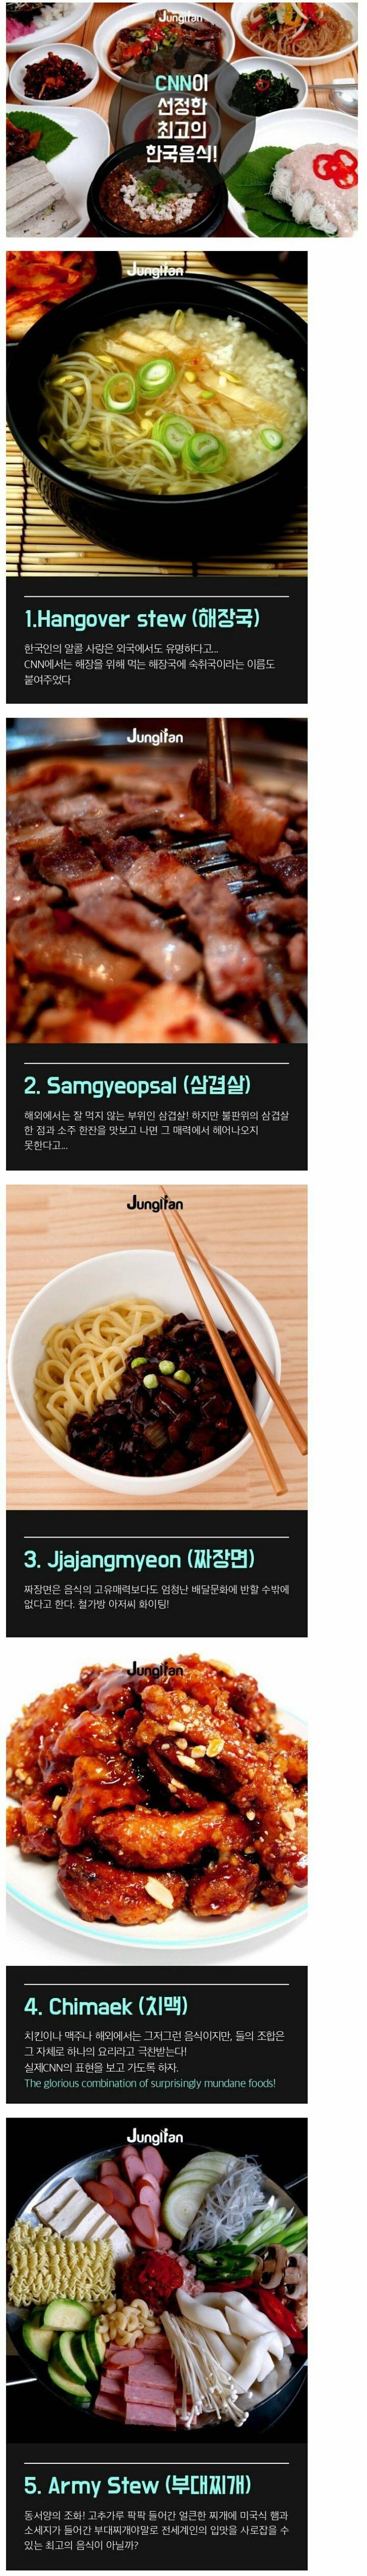 CNN 선정 최고의 한국 음식.jpg | 인스티즈